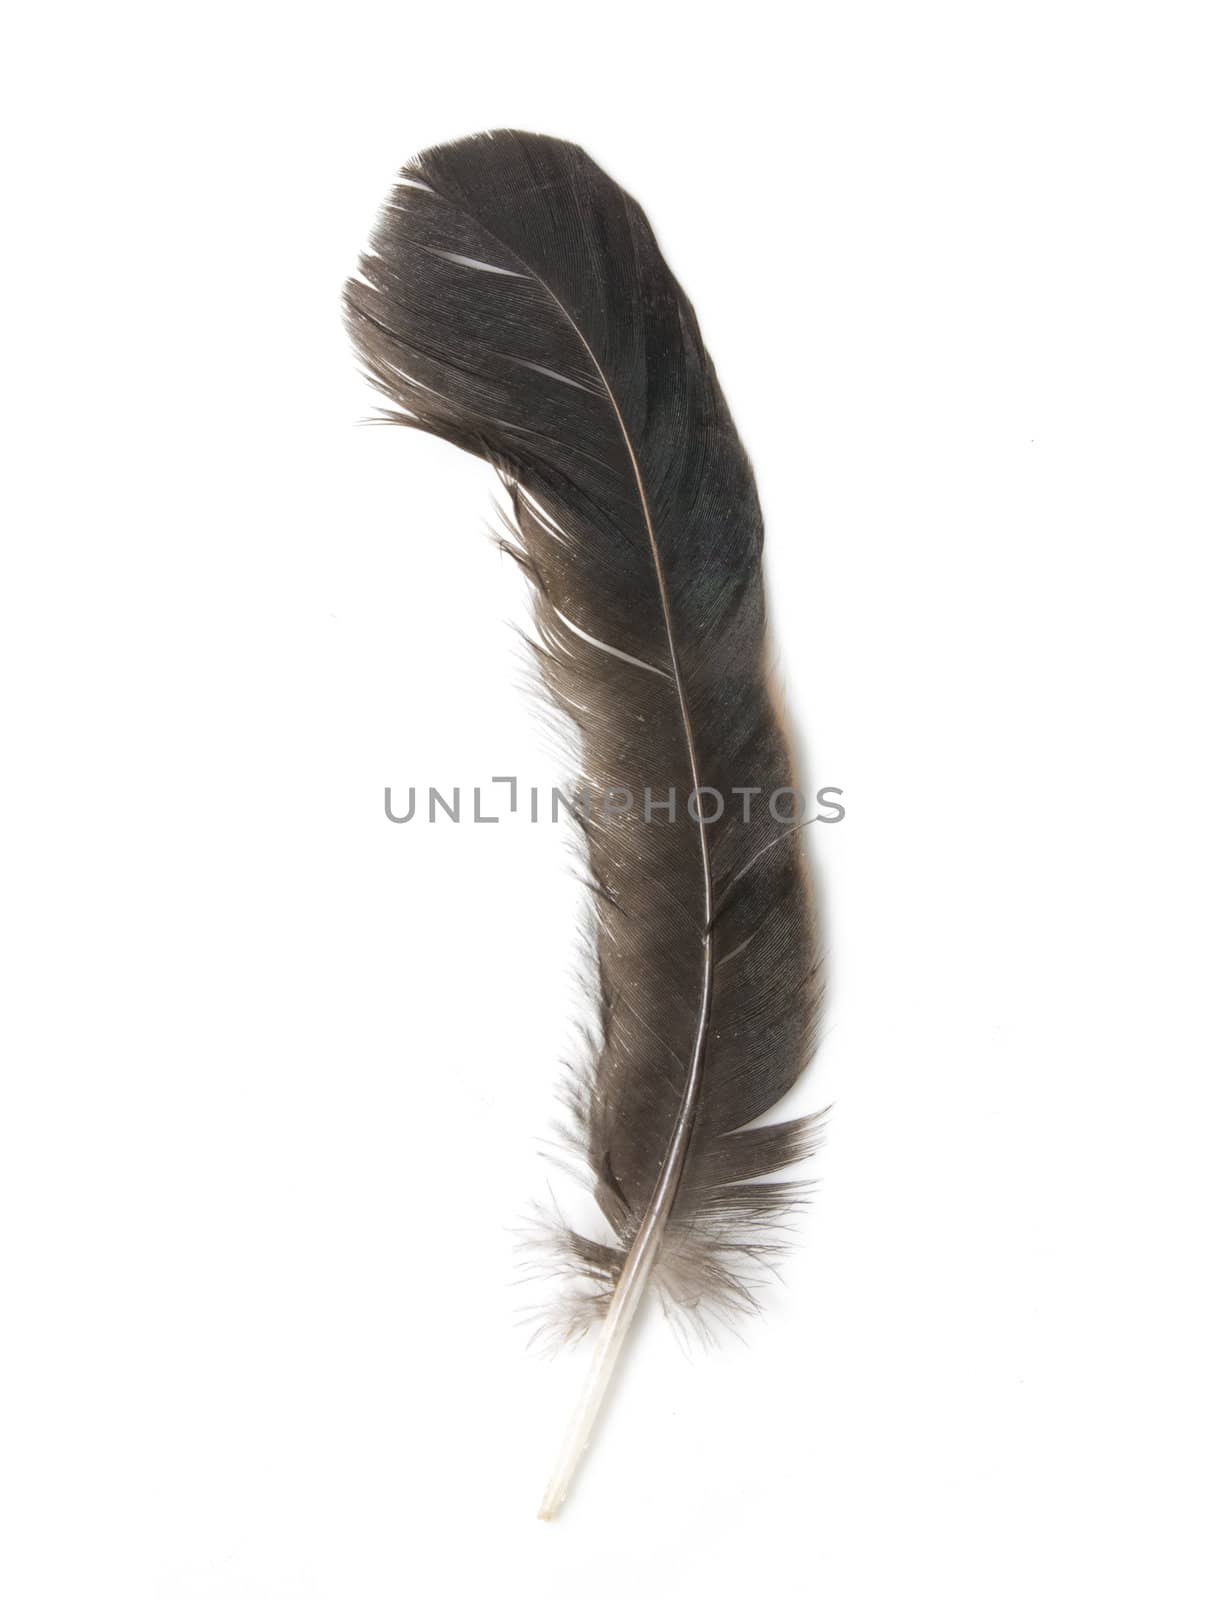 Bird feather isolated on white background  by schankz